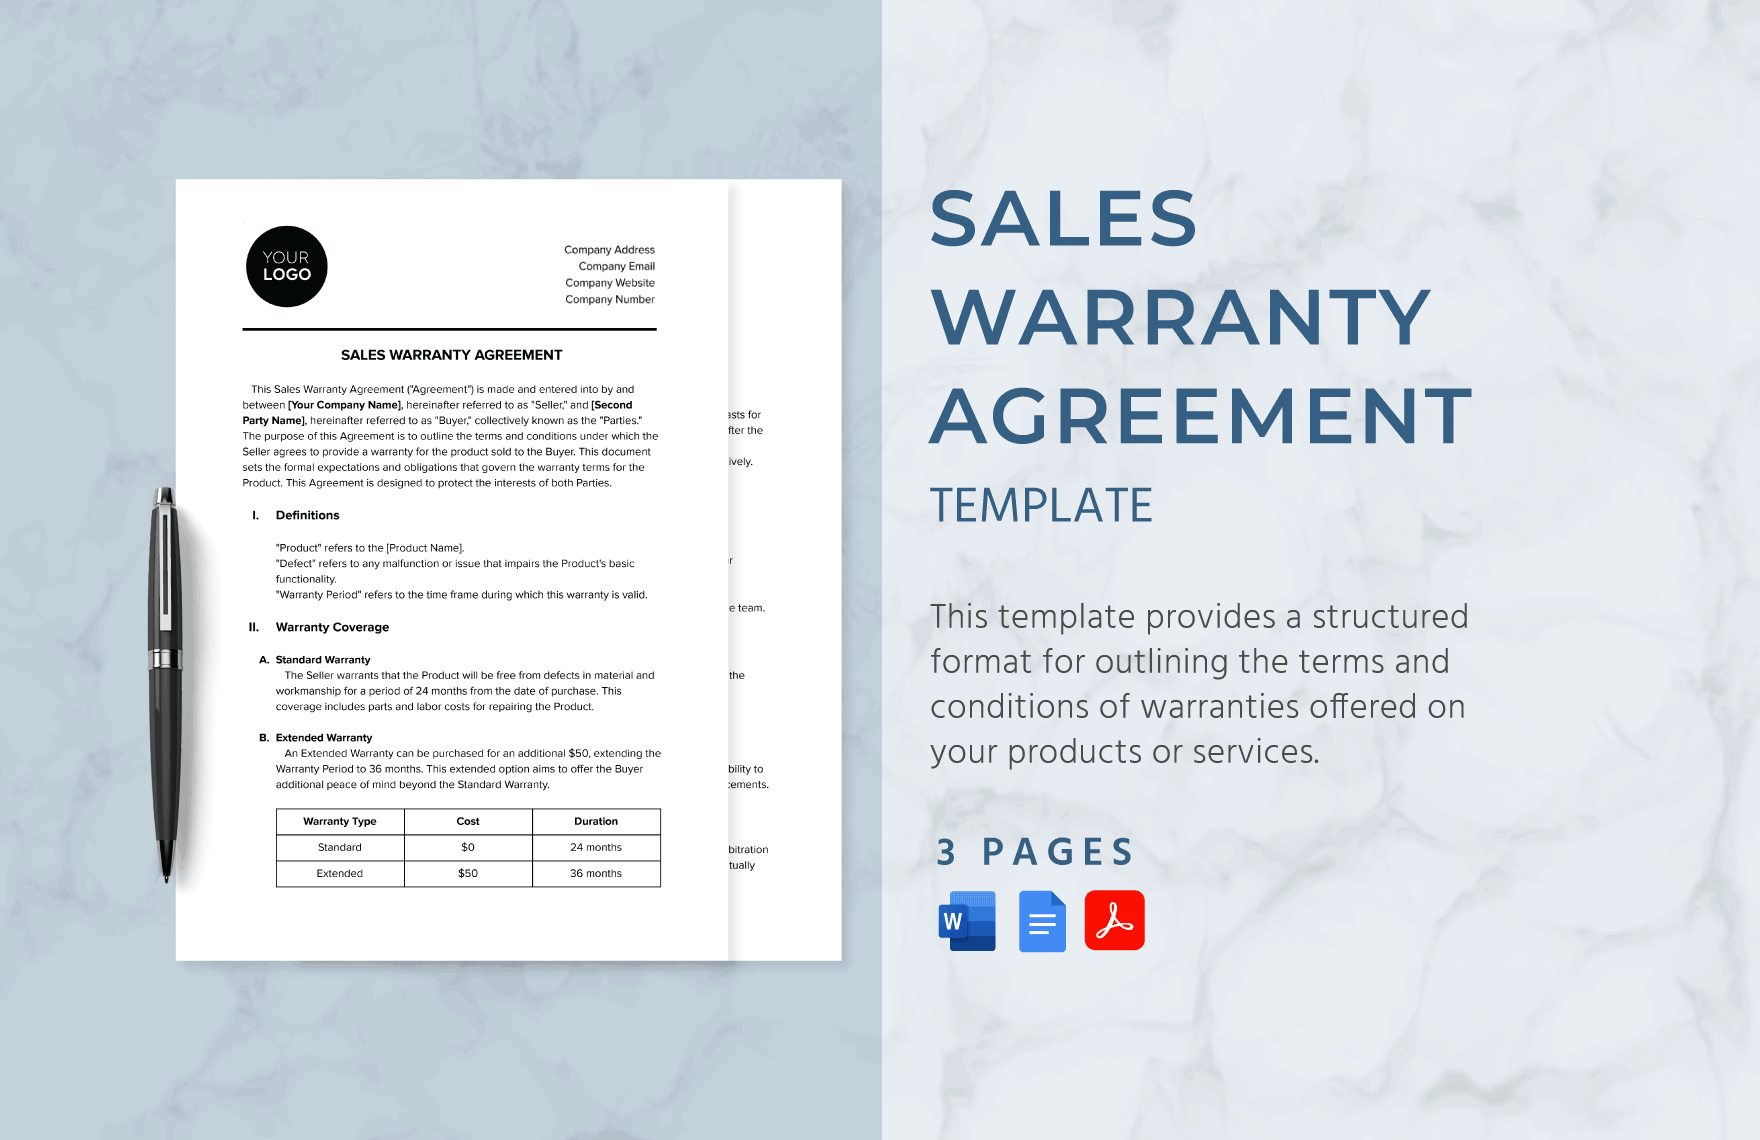 Sales Warranty Agreement Template in Word, Google Docs, PDF